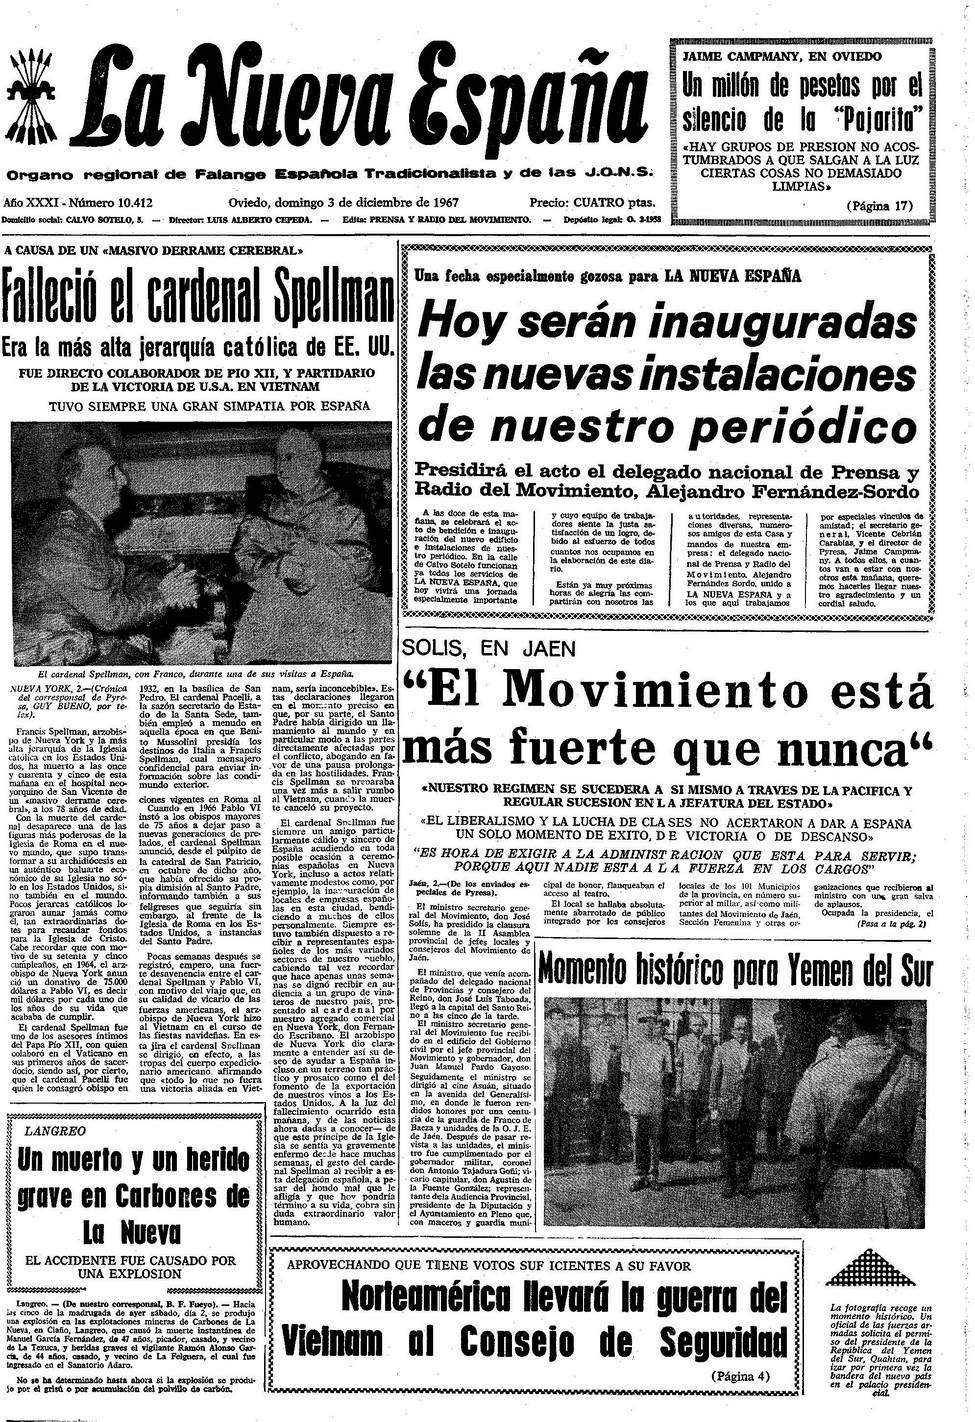 Portada del Domingo, 3 de Diciembre de 1967